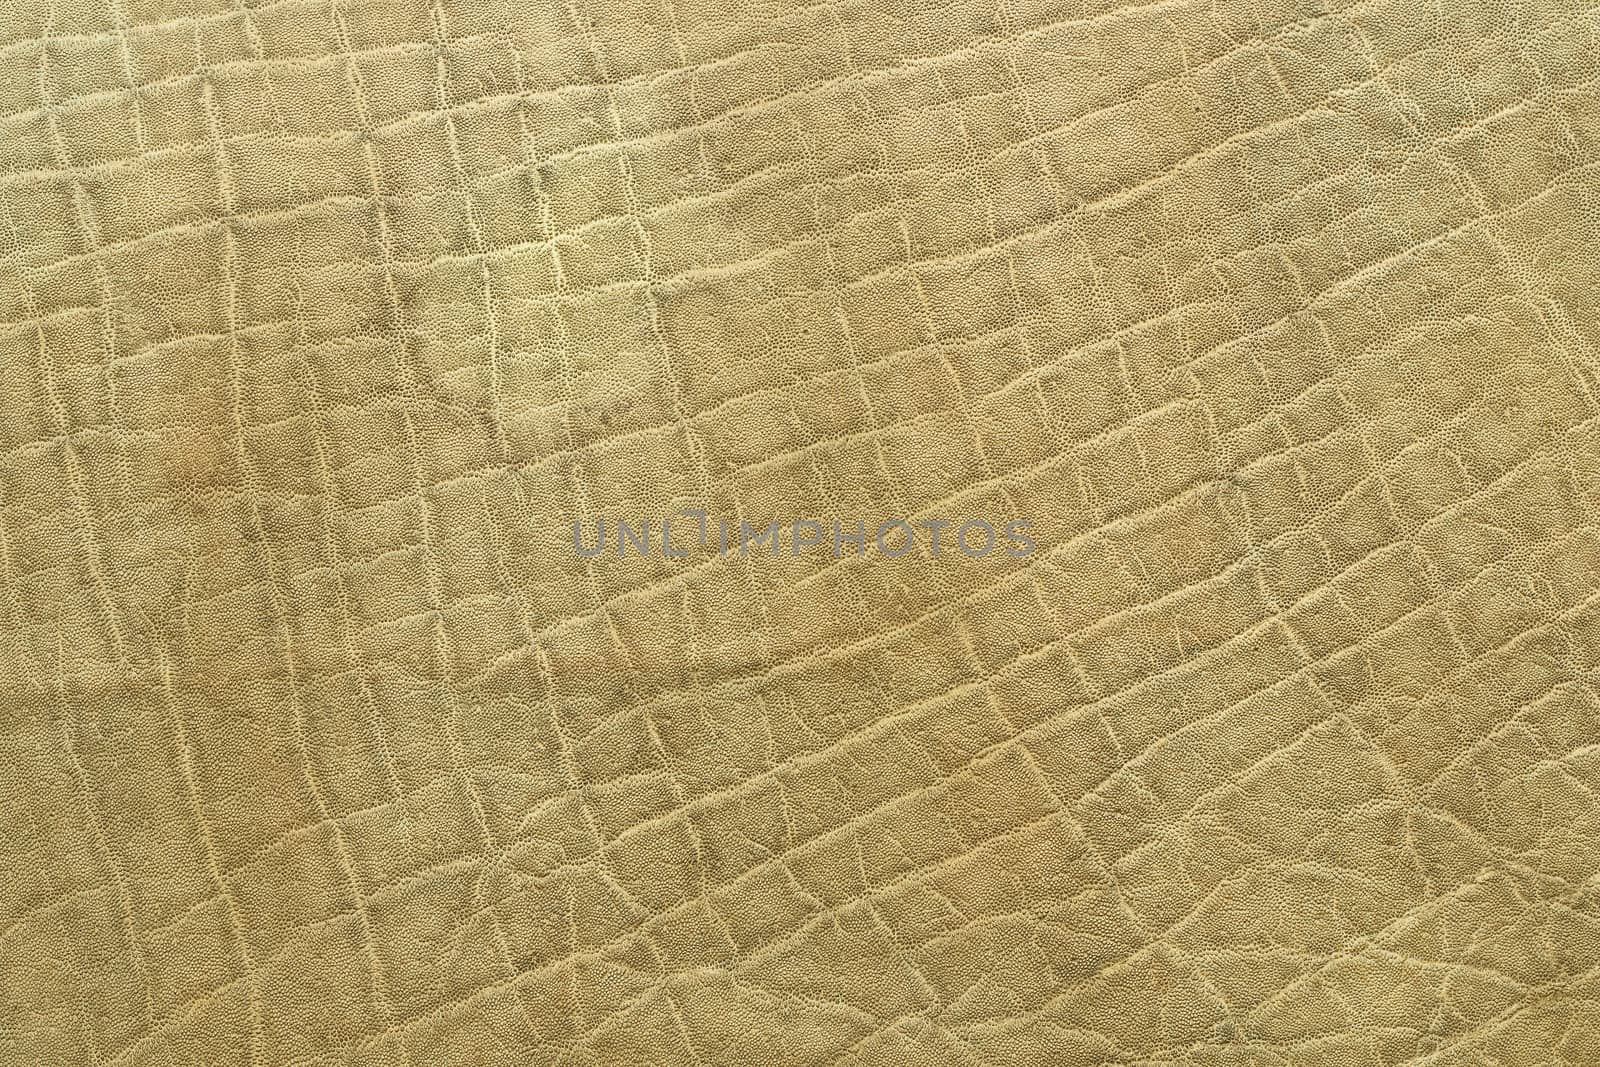 detail of elephant pelt by taviphoto